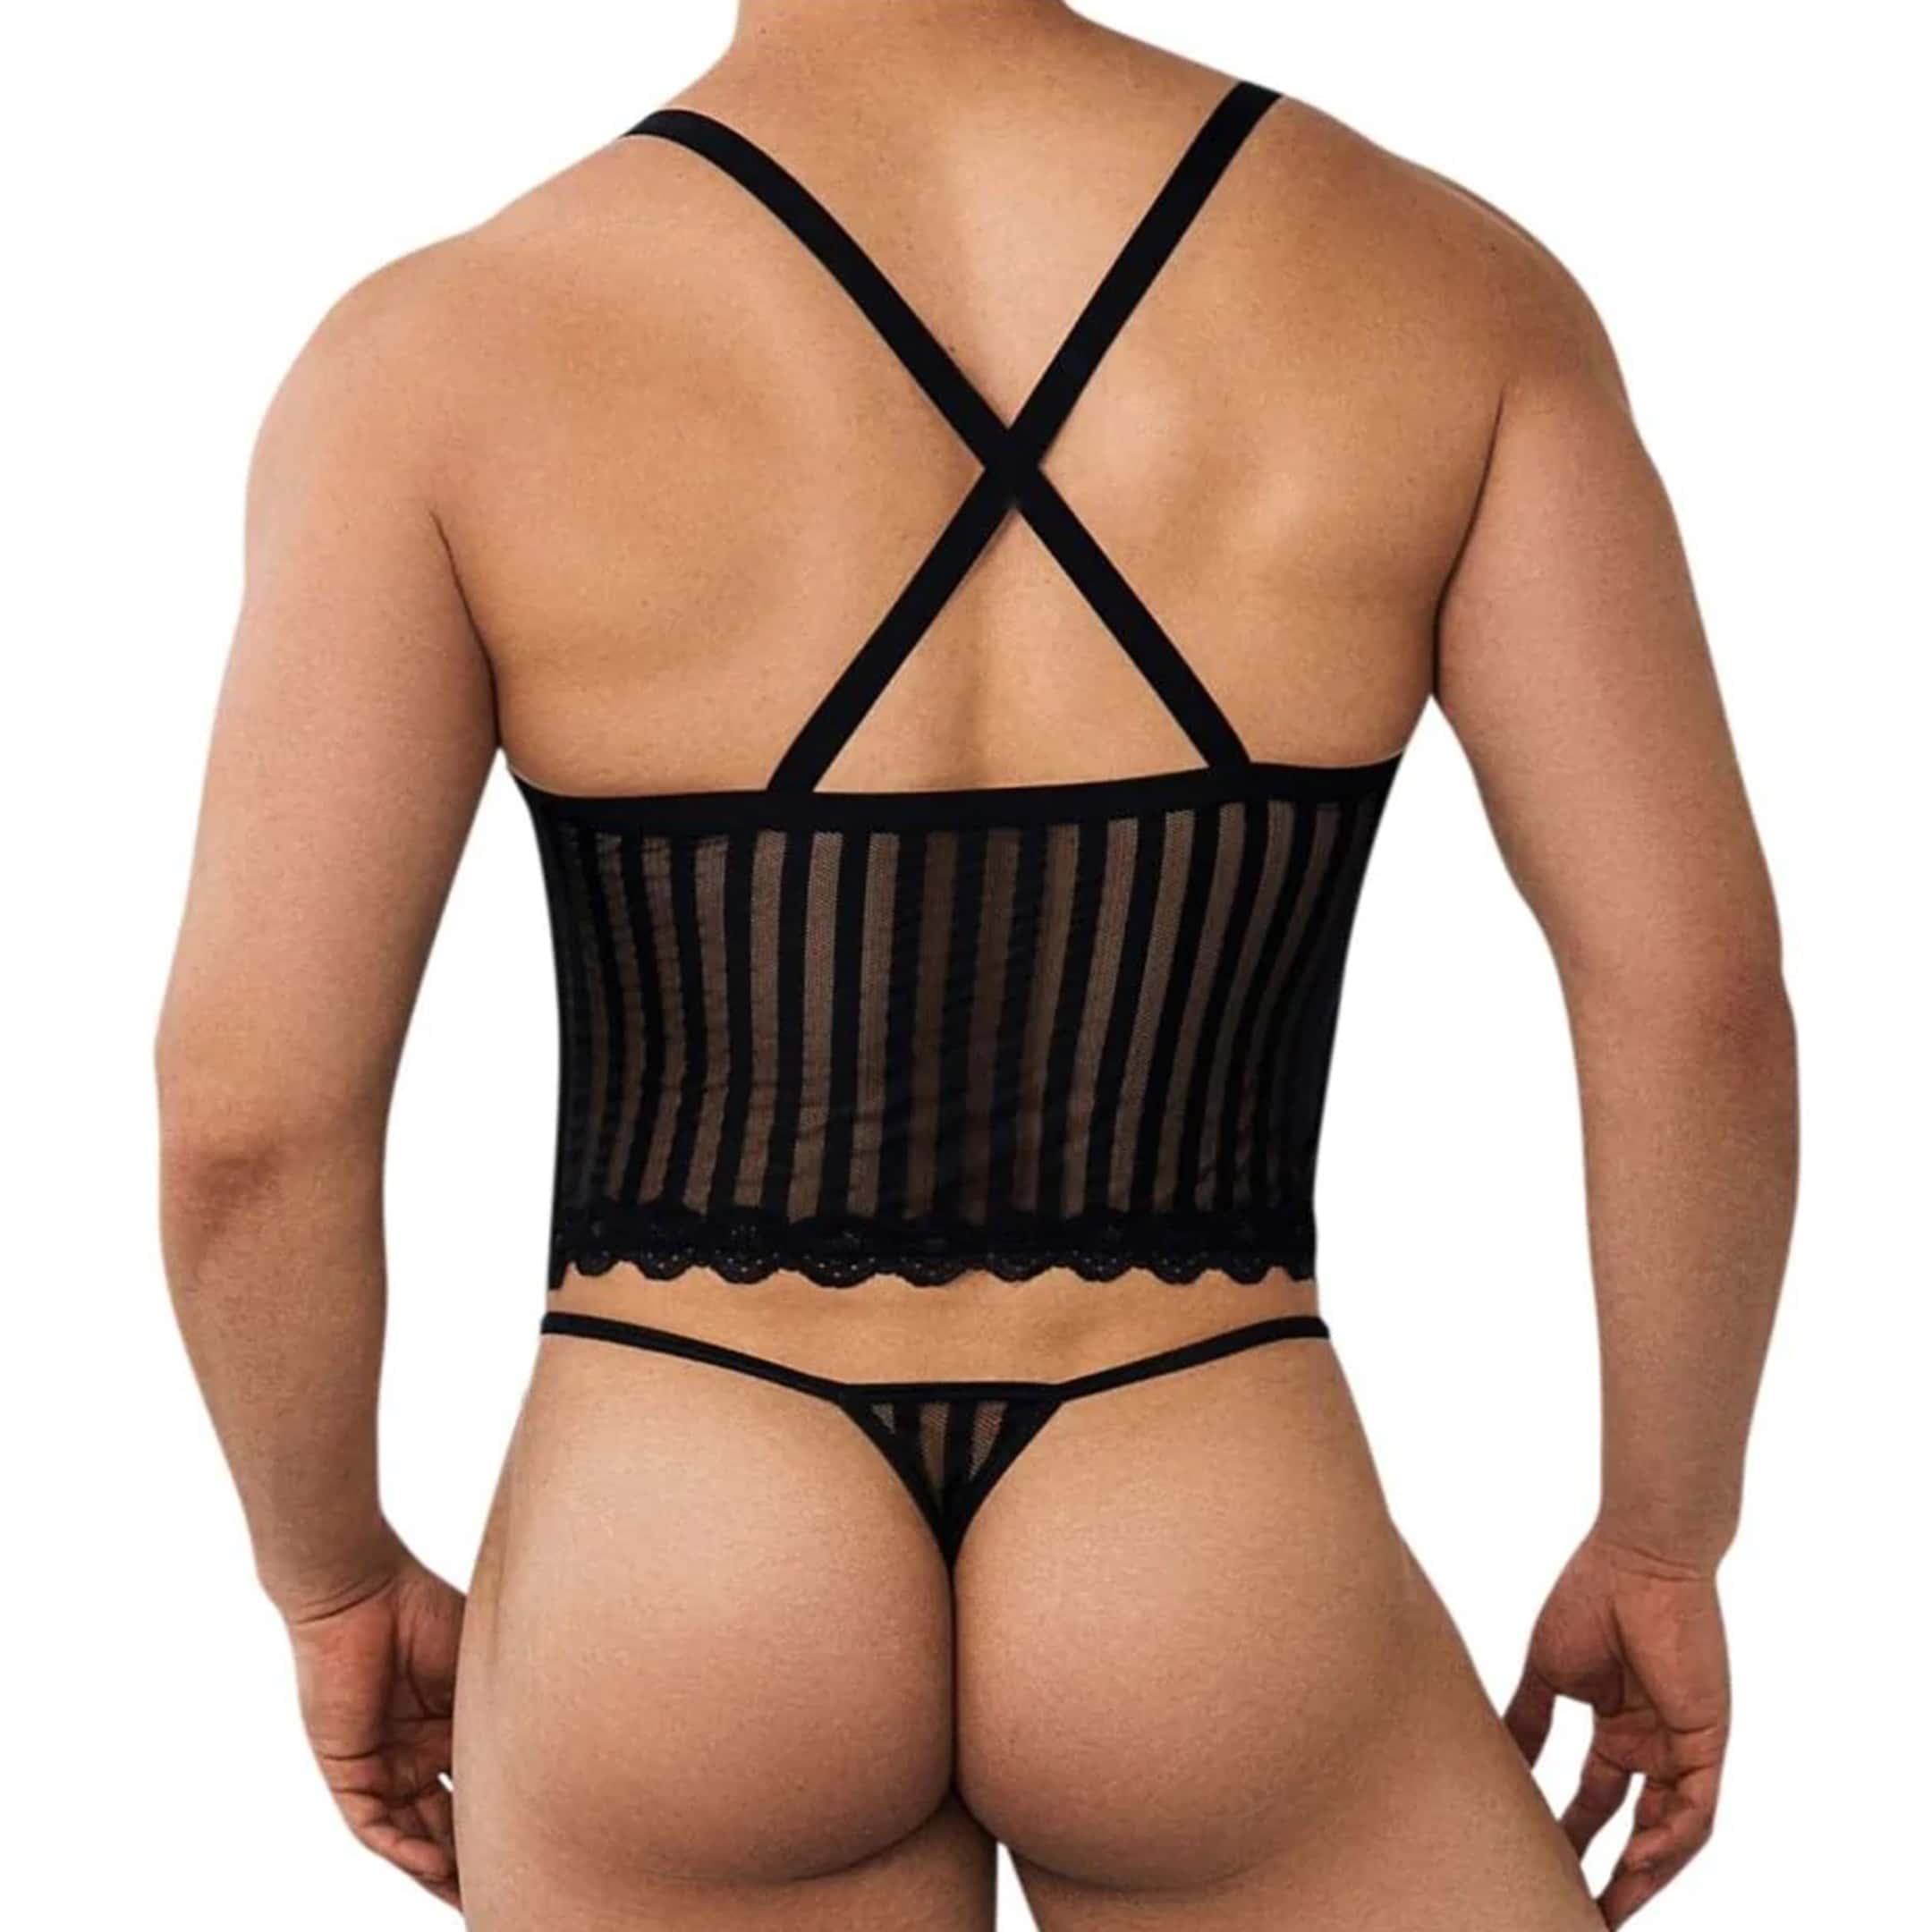 https://www.inderwear.com/150219/harness-g-string-set-black-candyman.jpg